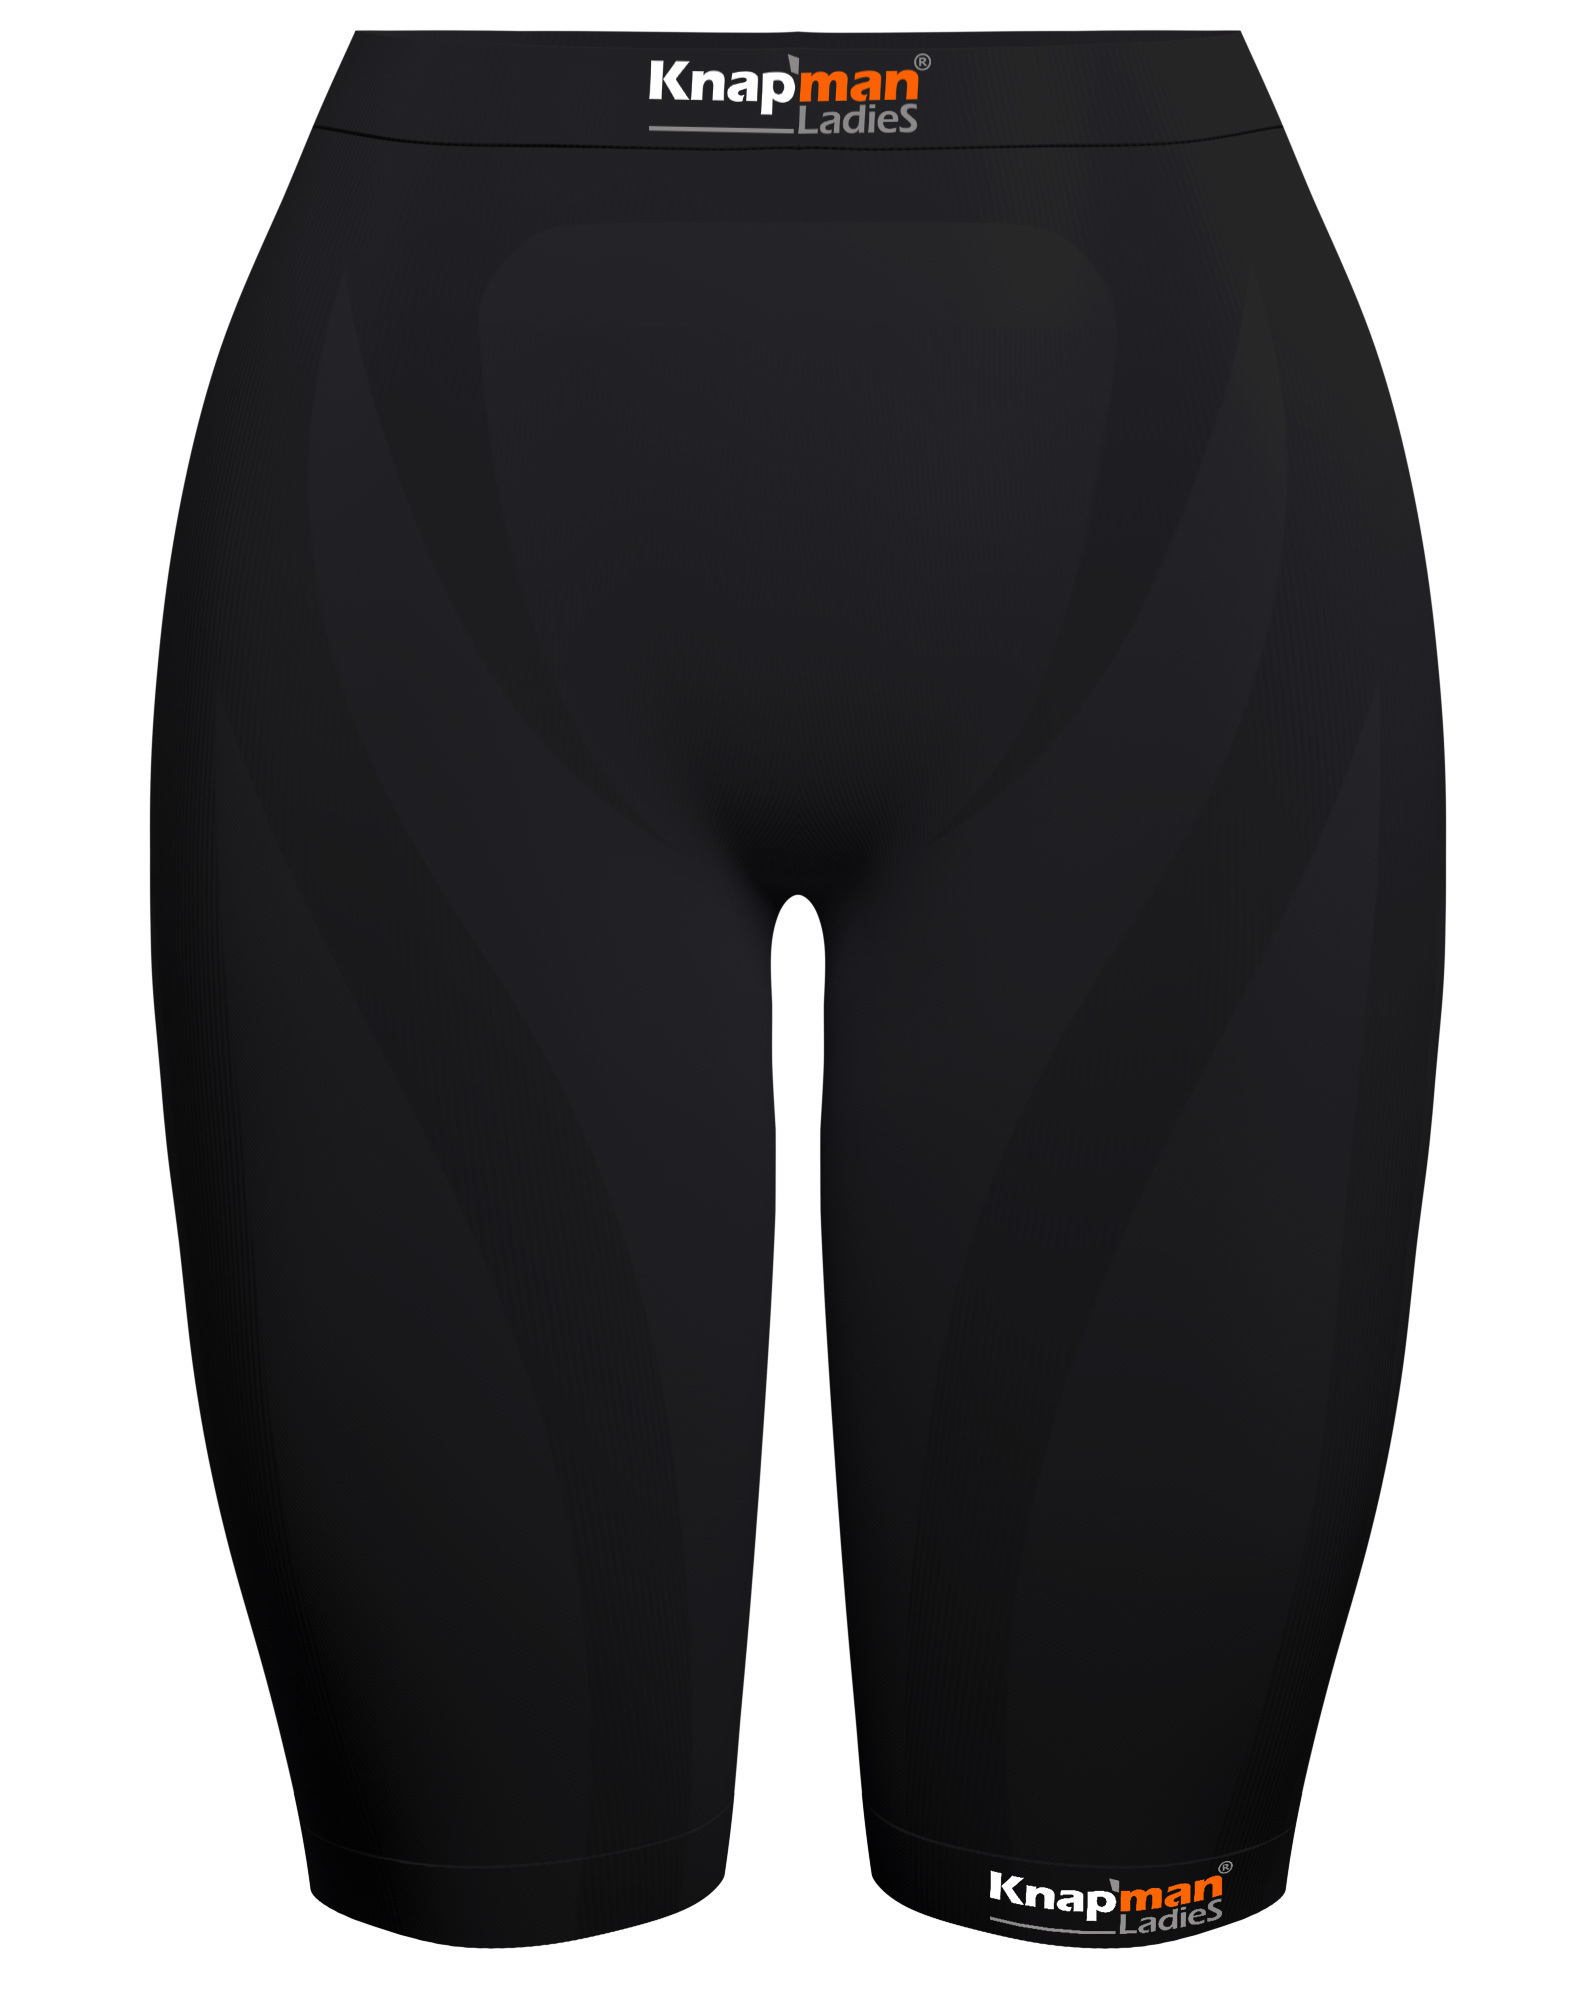 Knap'man Women's Compression Shorts Black - 45%